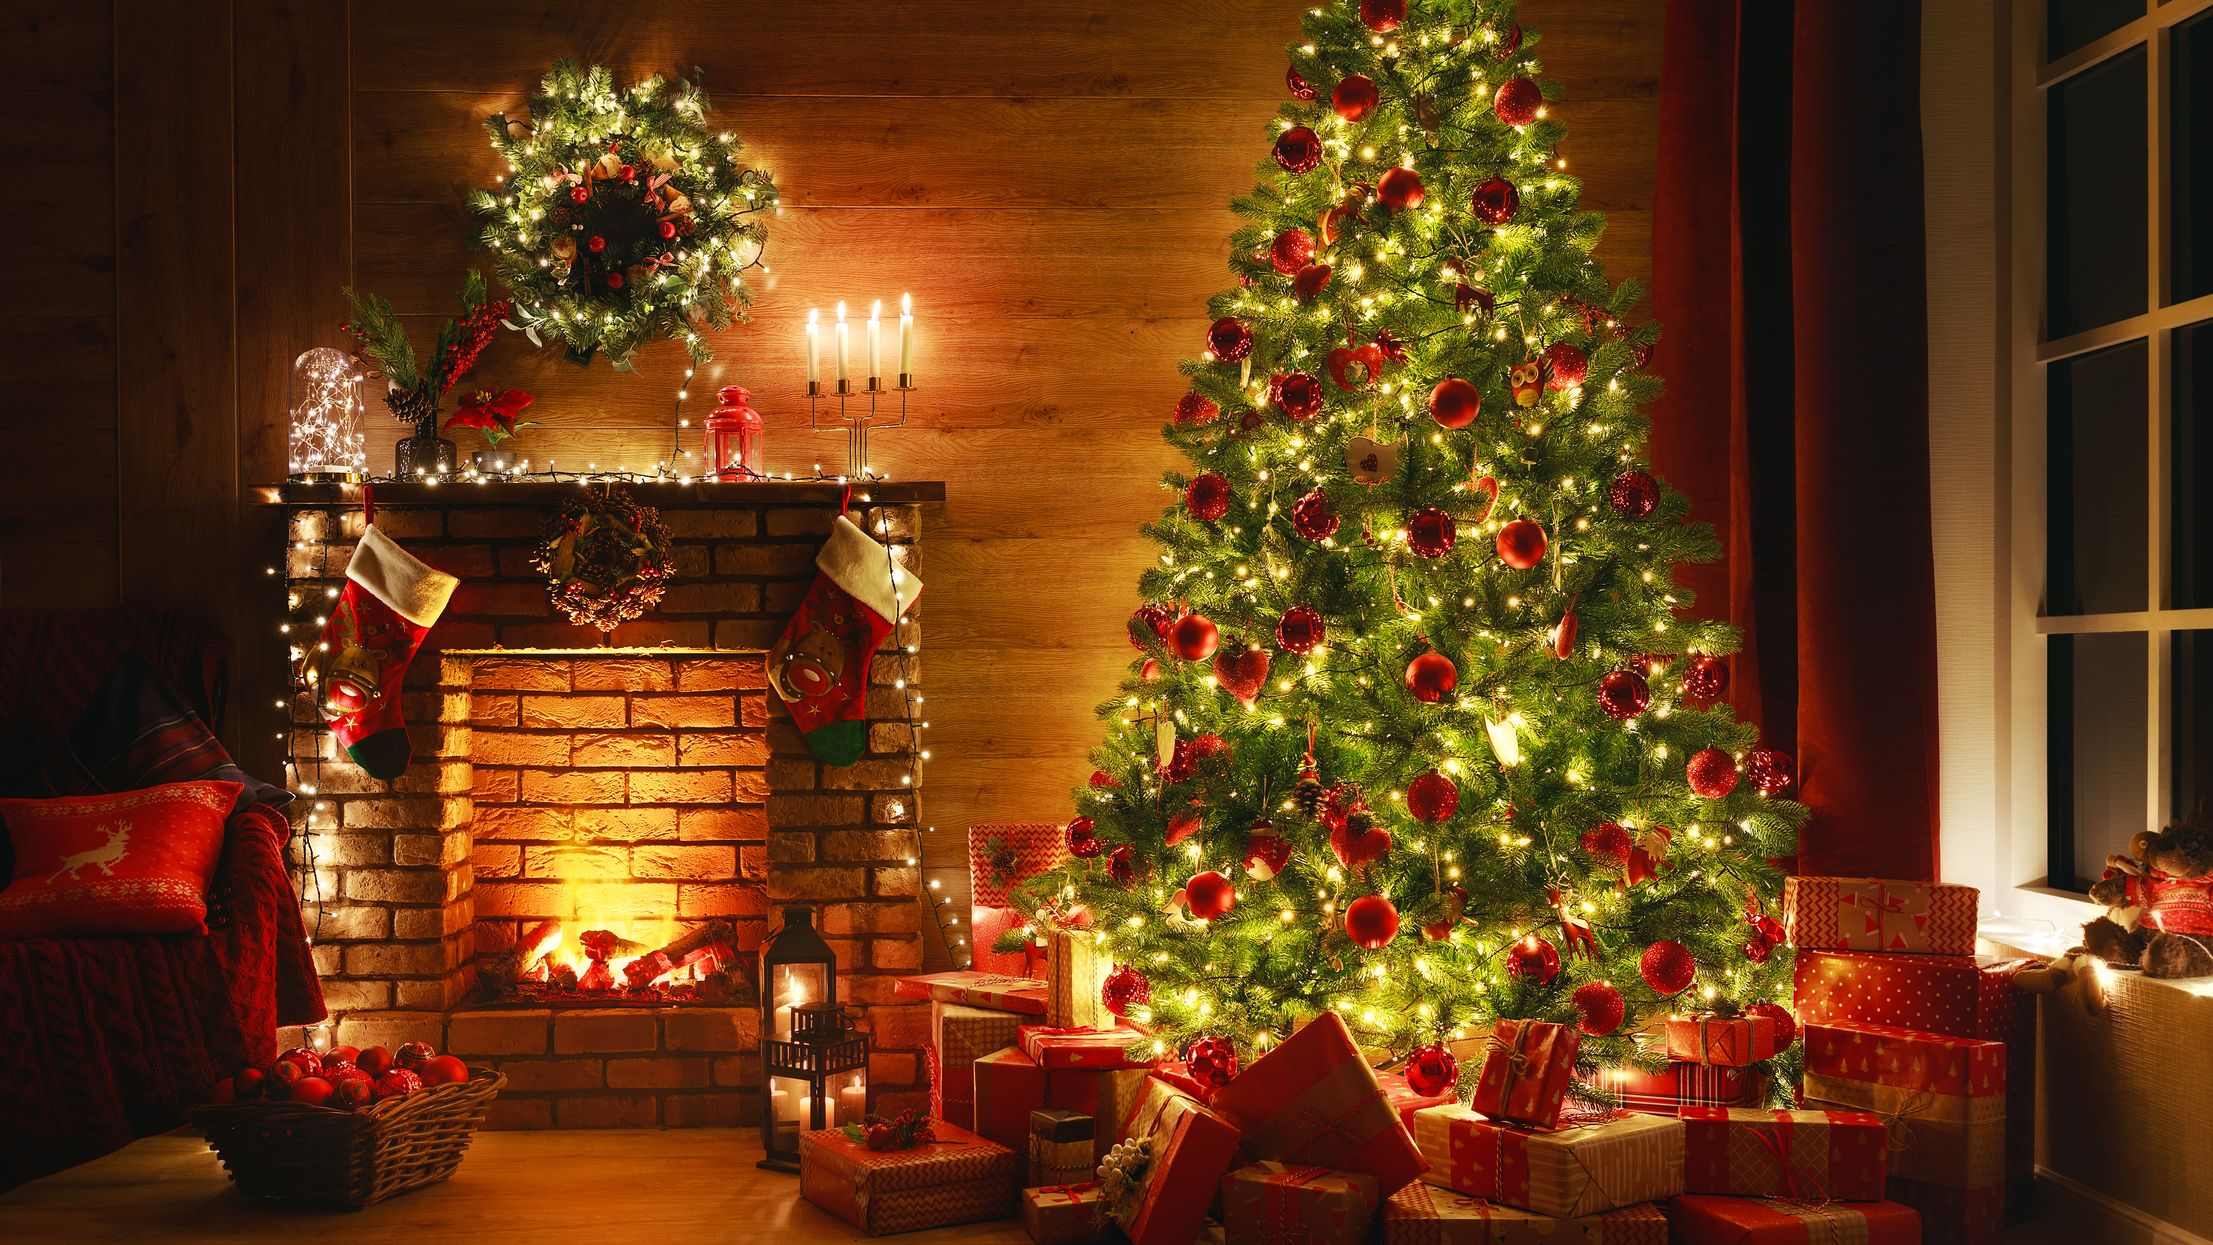 interior-christmas-magic-glowing-tree-fireplace-royalty-free-image-1628537941.jpg